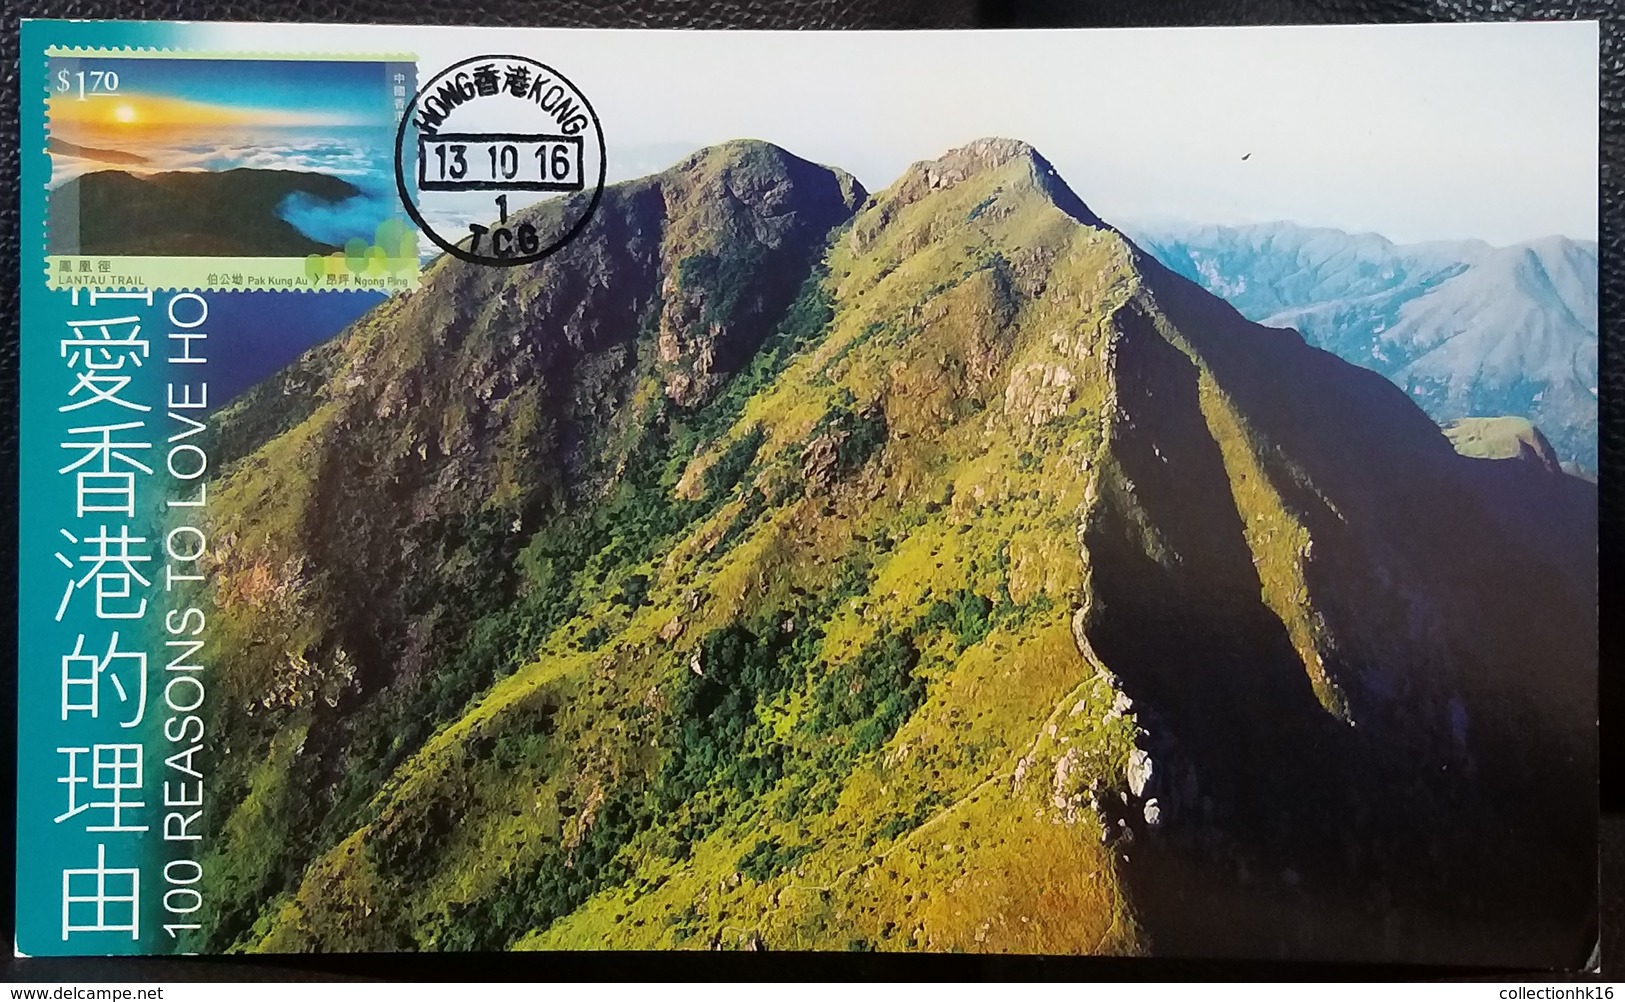 HK Hiking Trails Series No. 1: Lantau Trail Lantau Peak Sun Rise 2016 Hong Kong Maximum Card MC (Location Postmark) - Maximumkarten